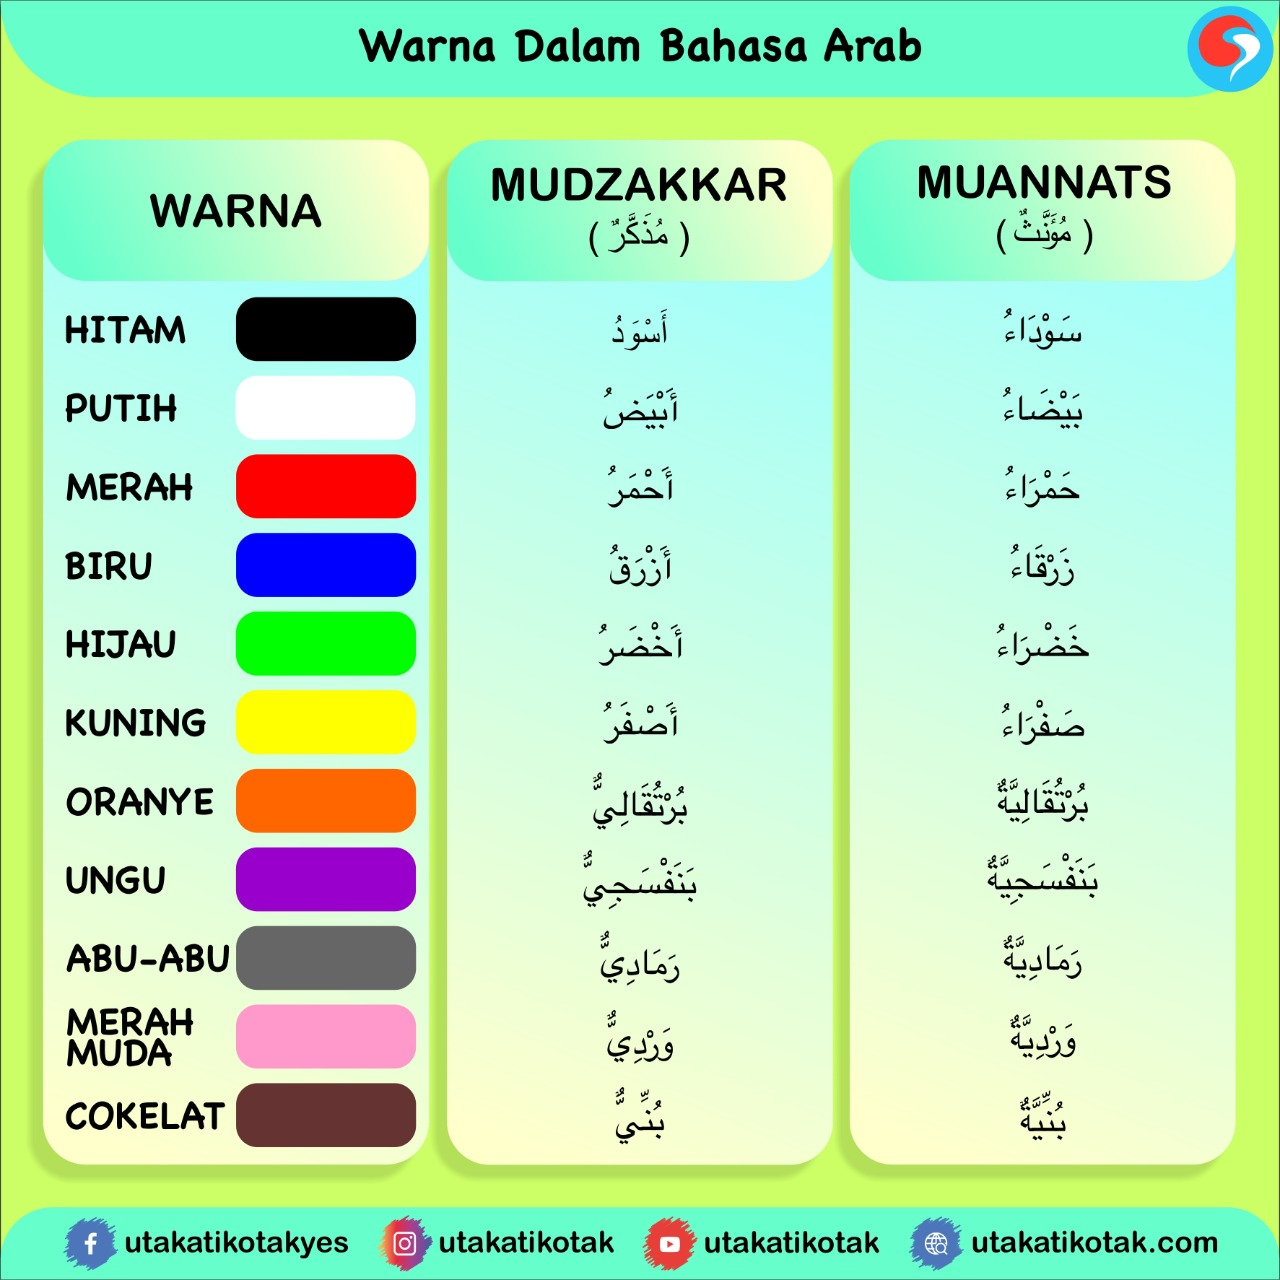 Kosakata Warna Warna dalam Bahasa  Arab beserta Contoh 